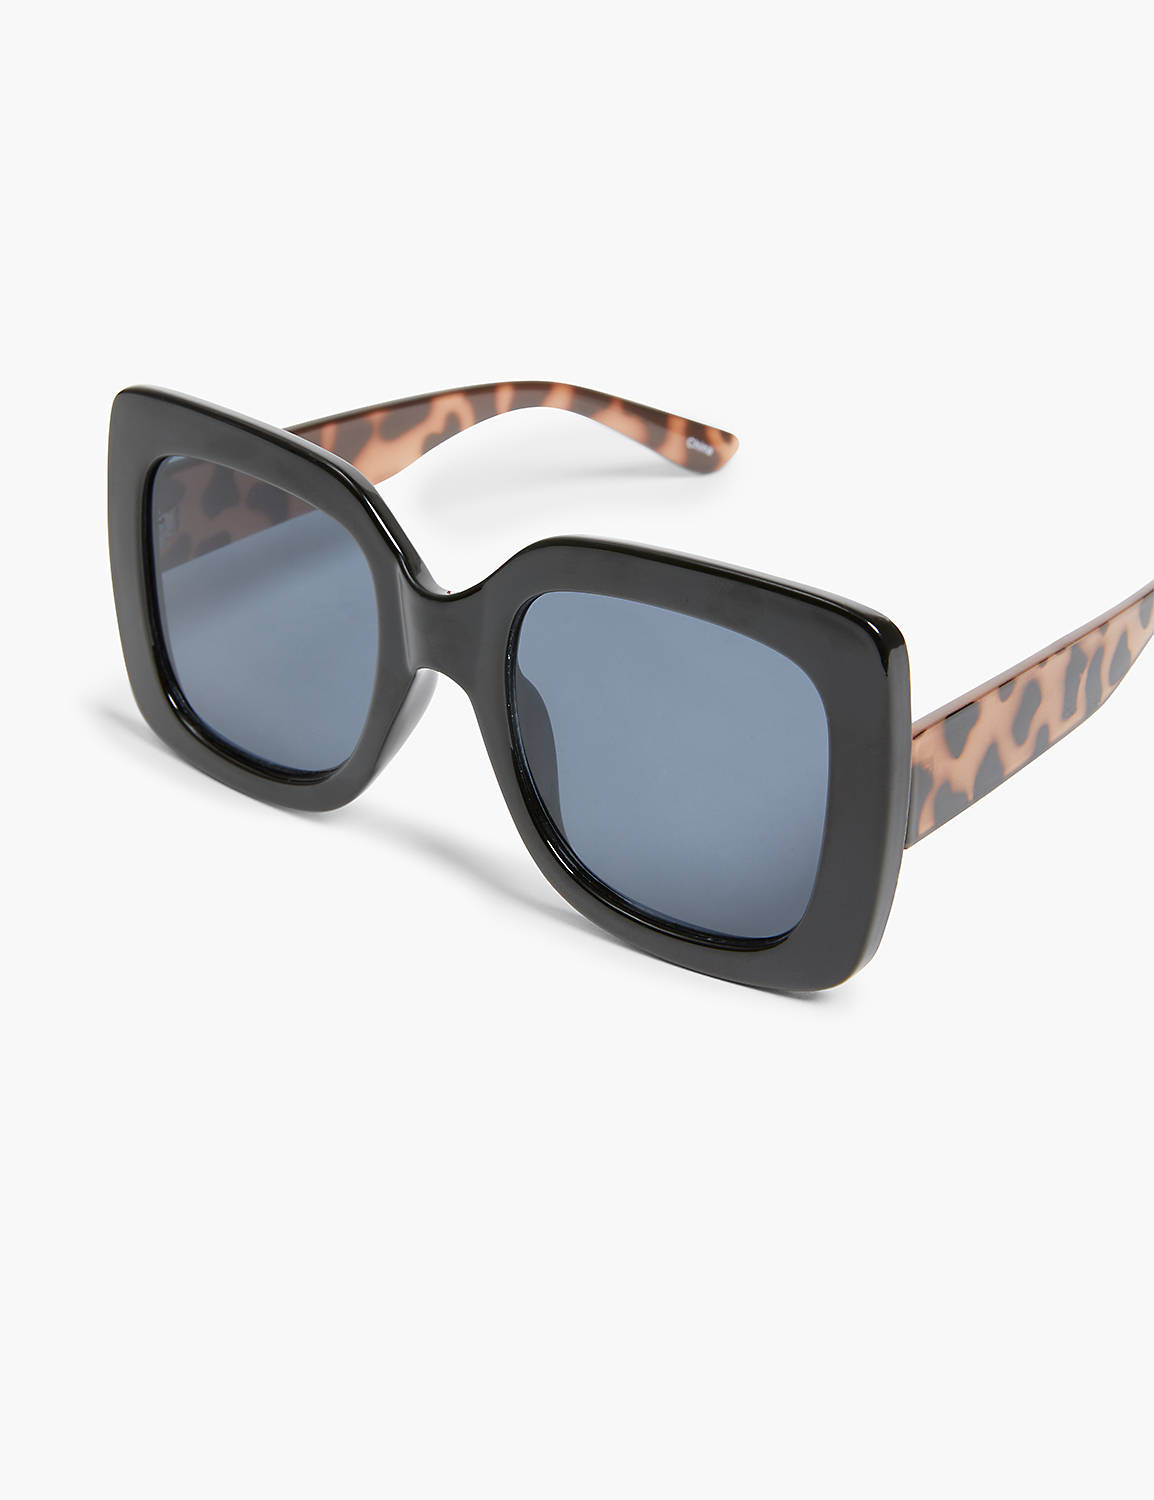 Oversized Square Sunglasses Product Image 1